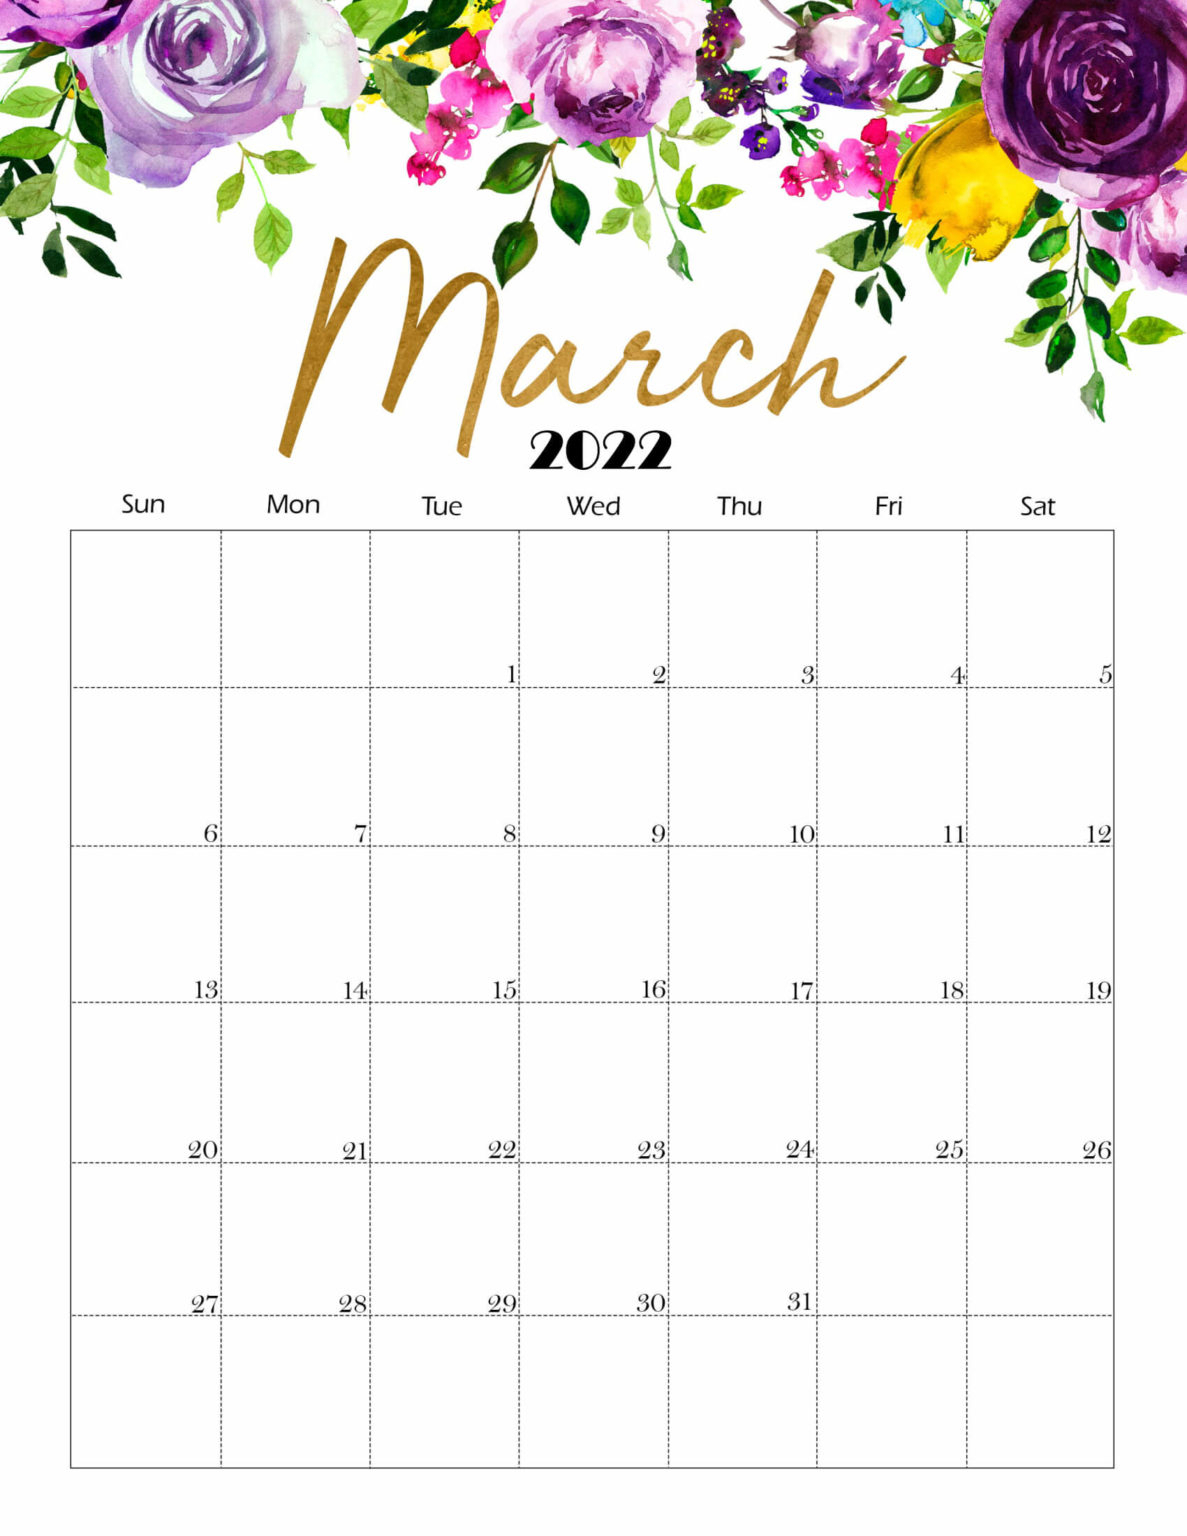 Get Blank Calendar 2022 March